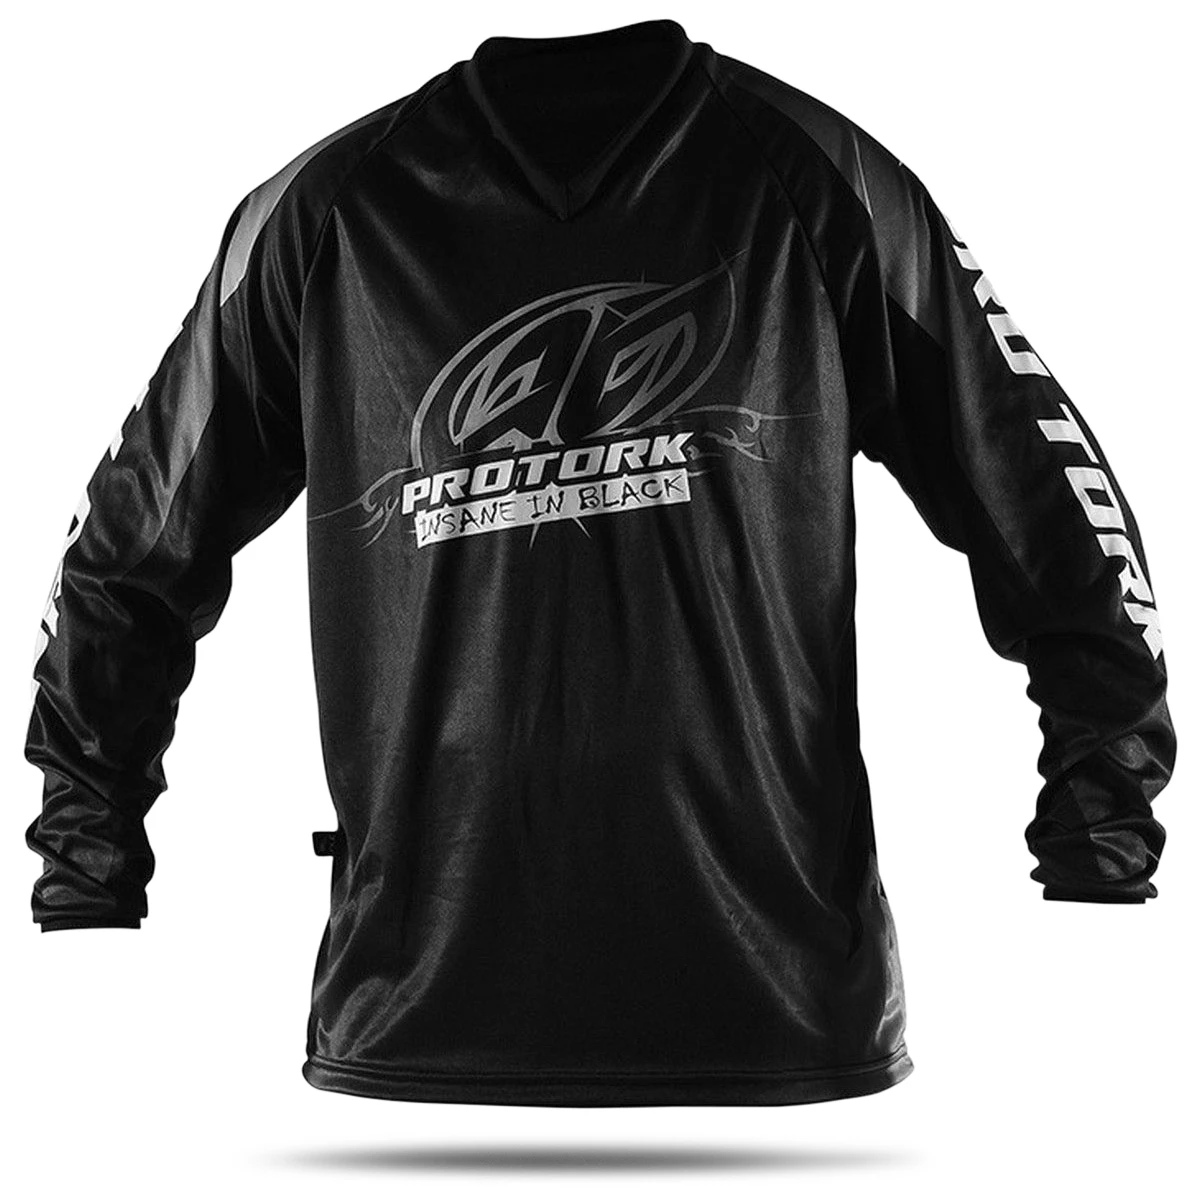 Camisa Motocross Pro Tork Insane In Black